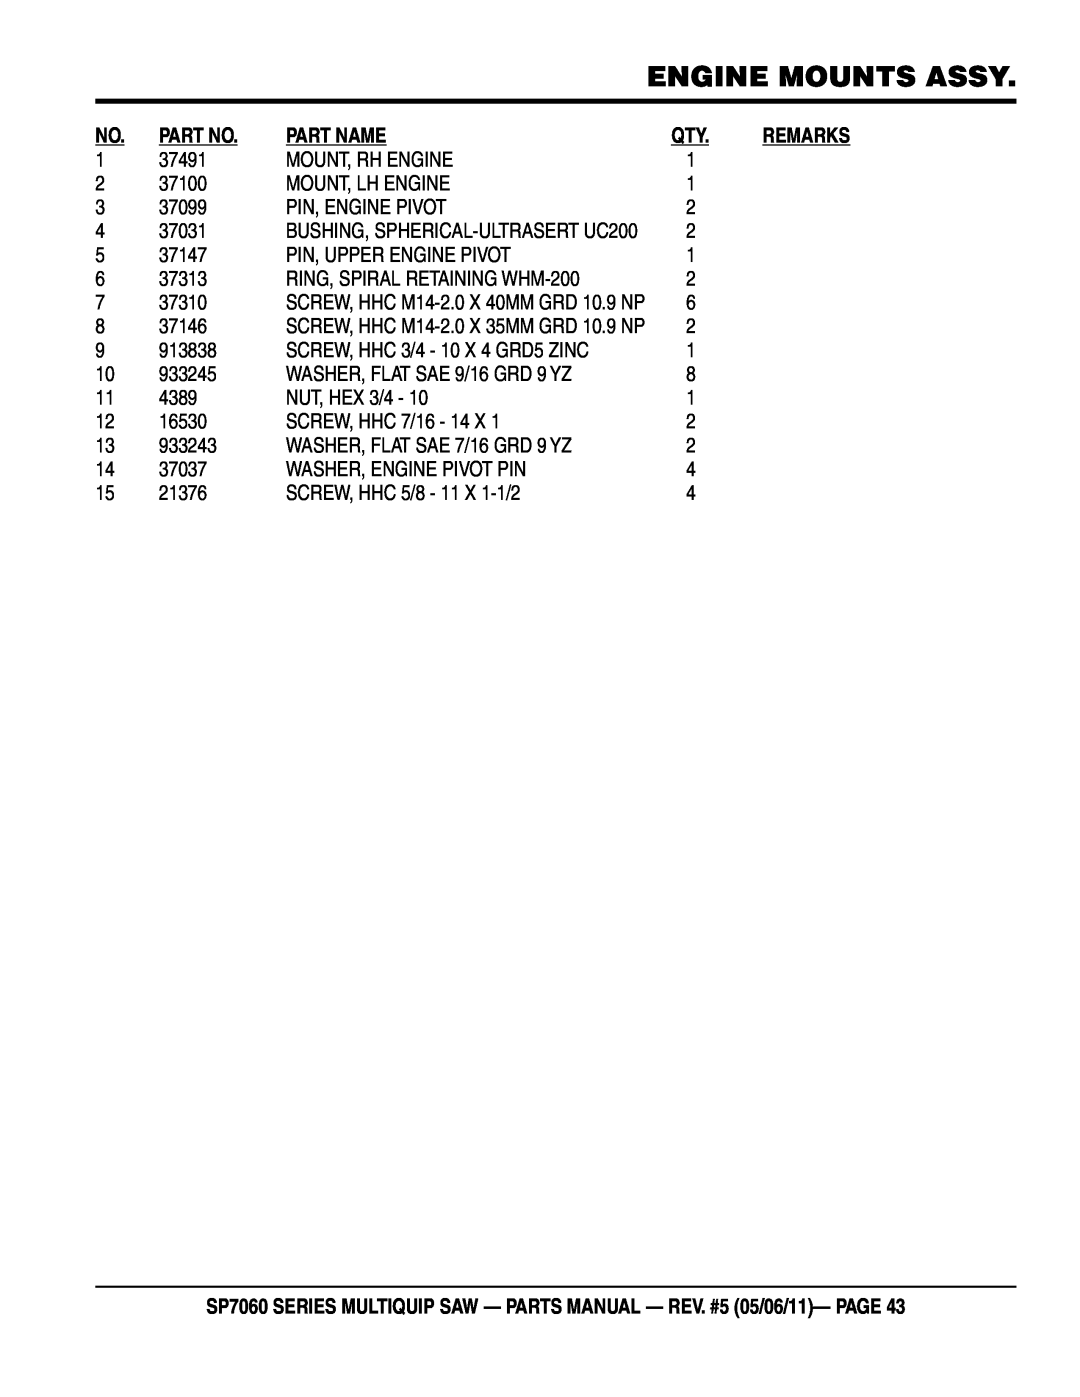 Multiquip SP706026 engine mounts assy, Part Name, SP7060 SERIES MULTIQUIP SAW - PARTS MANUAL - REV. #5 05/06/11- PAGE 